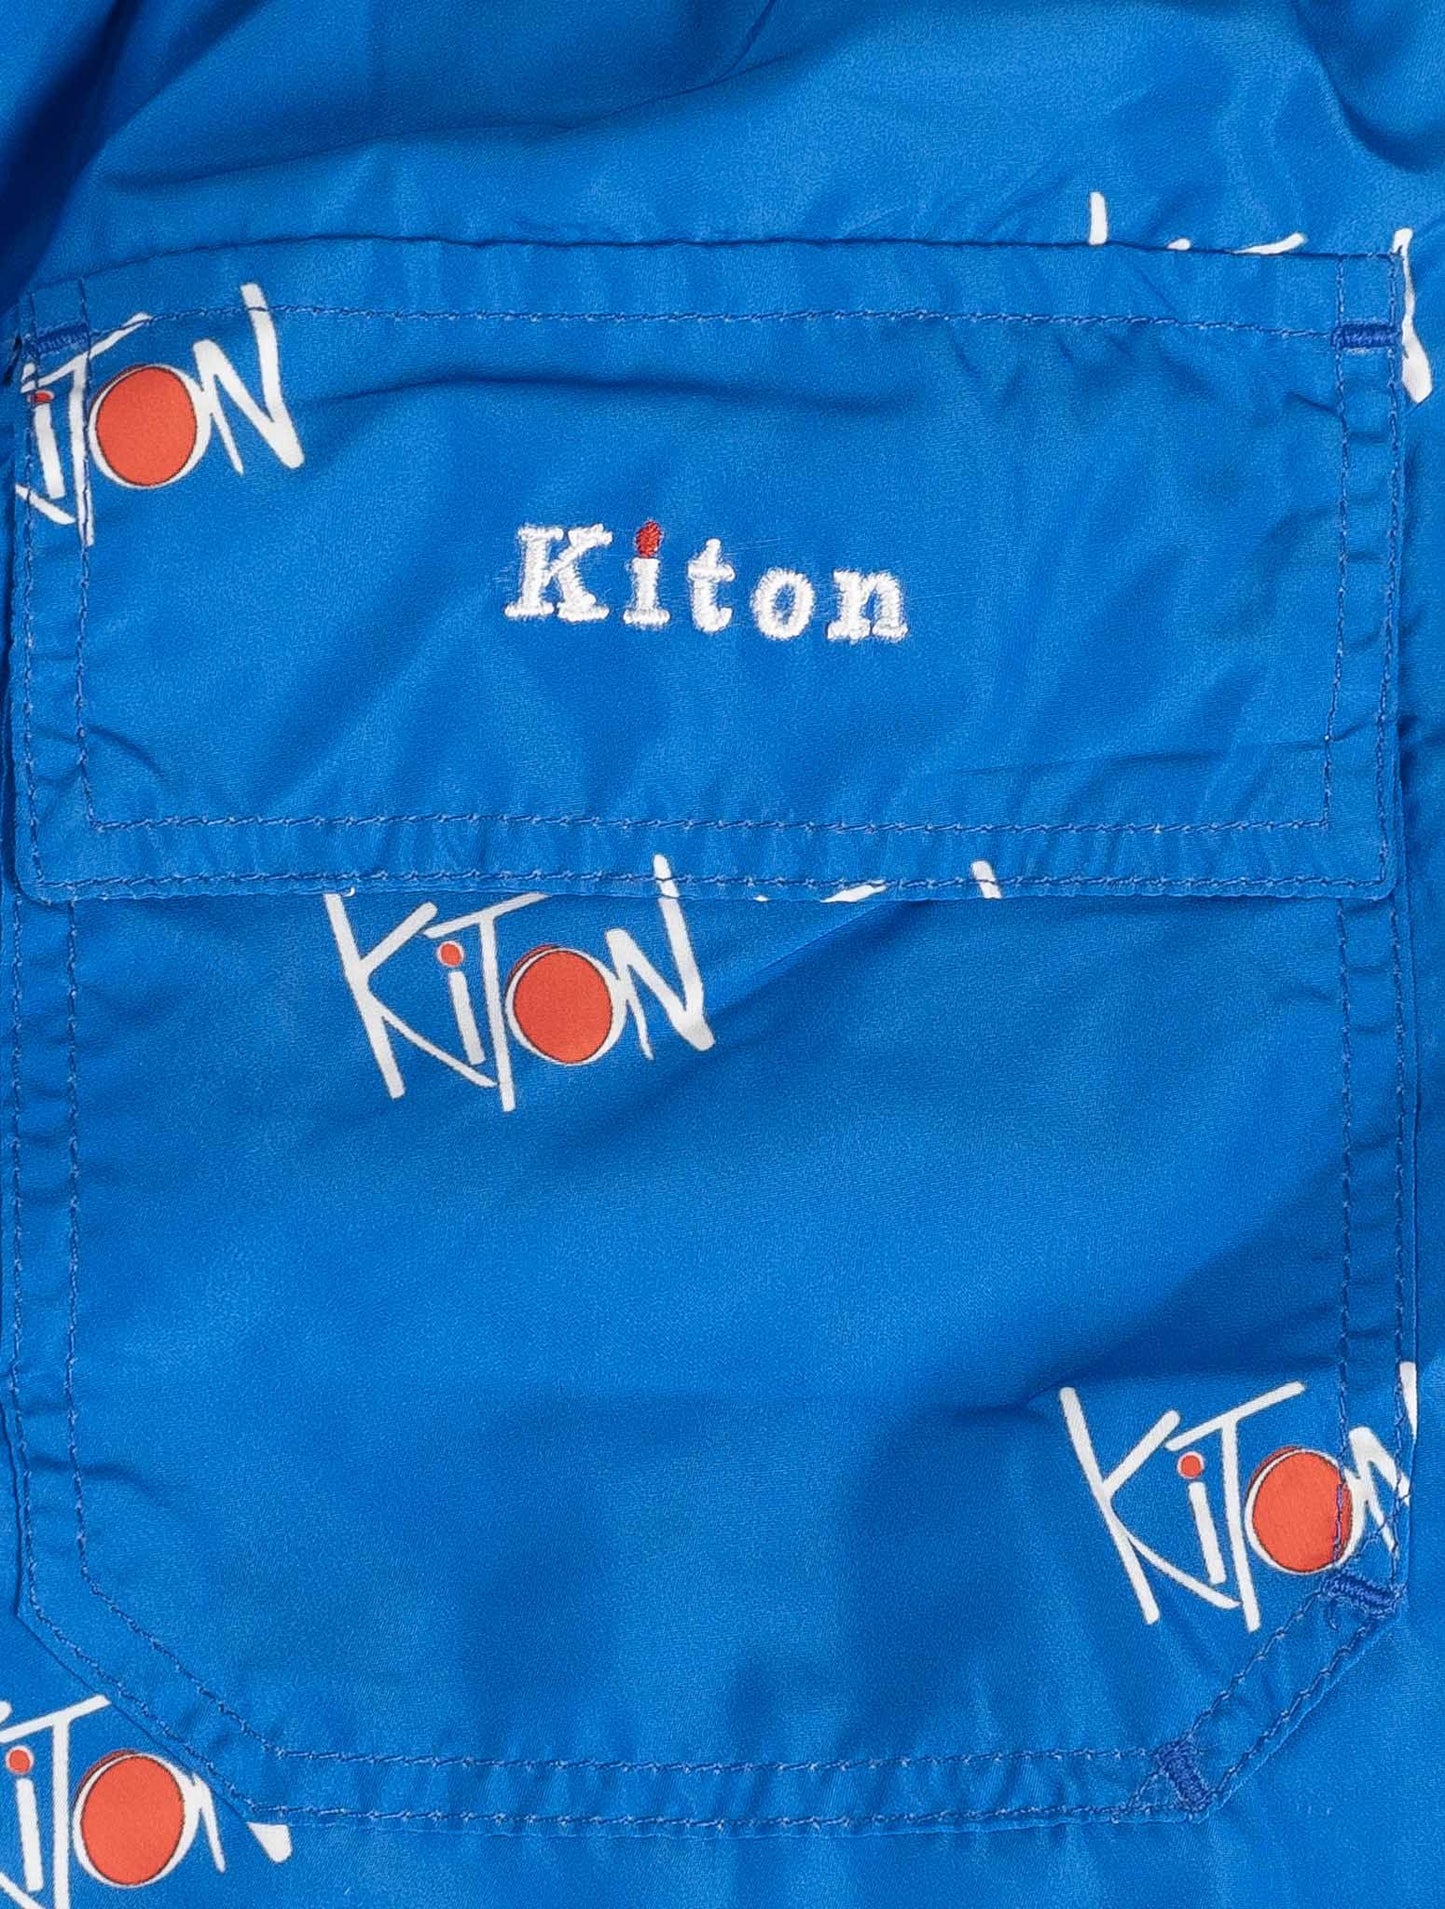 Kiton Blue Pl Plavky